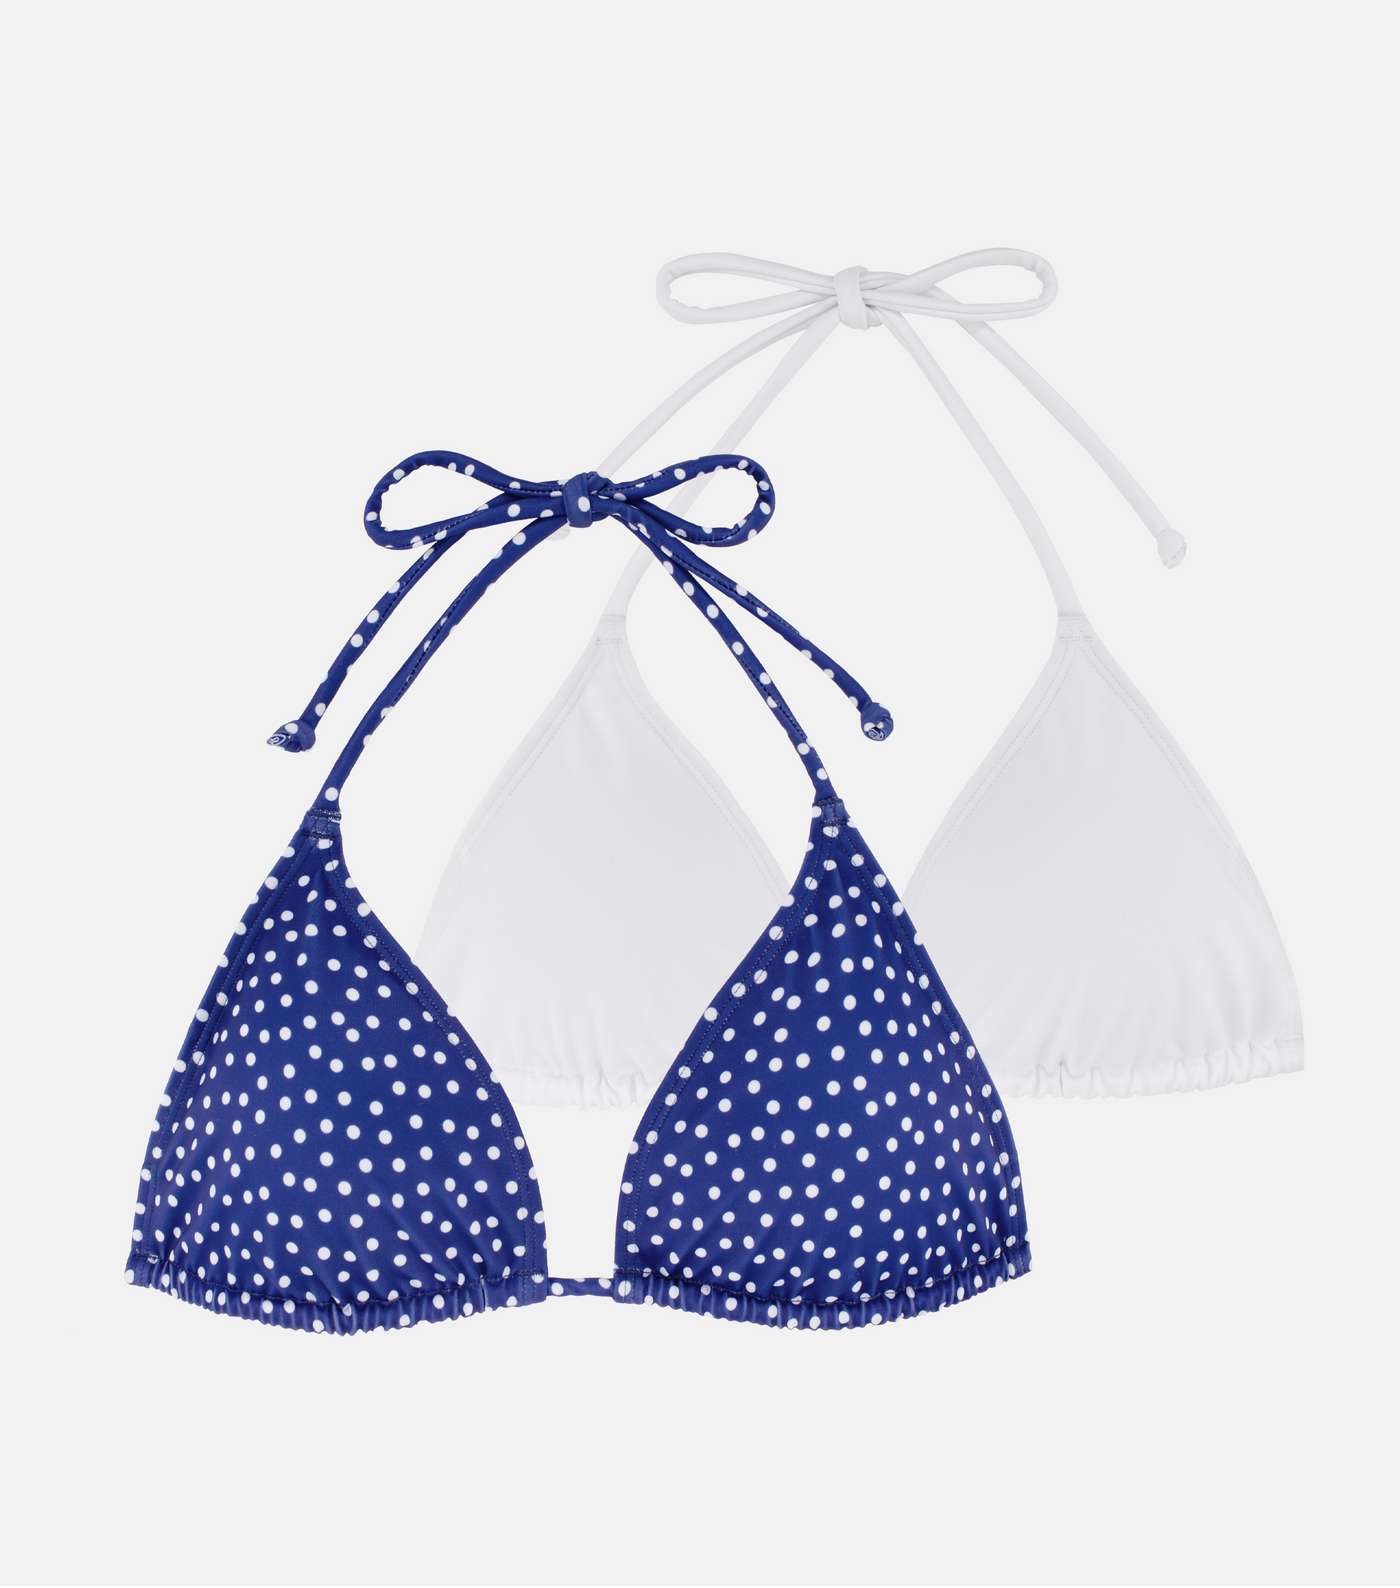 Dorina Blue Spot and White Triangle Bikini Tops Image 5